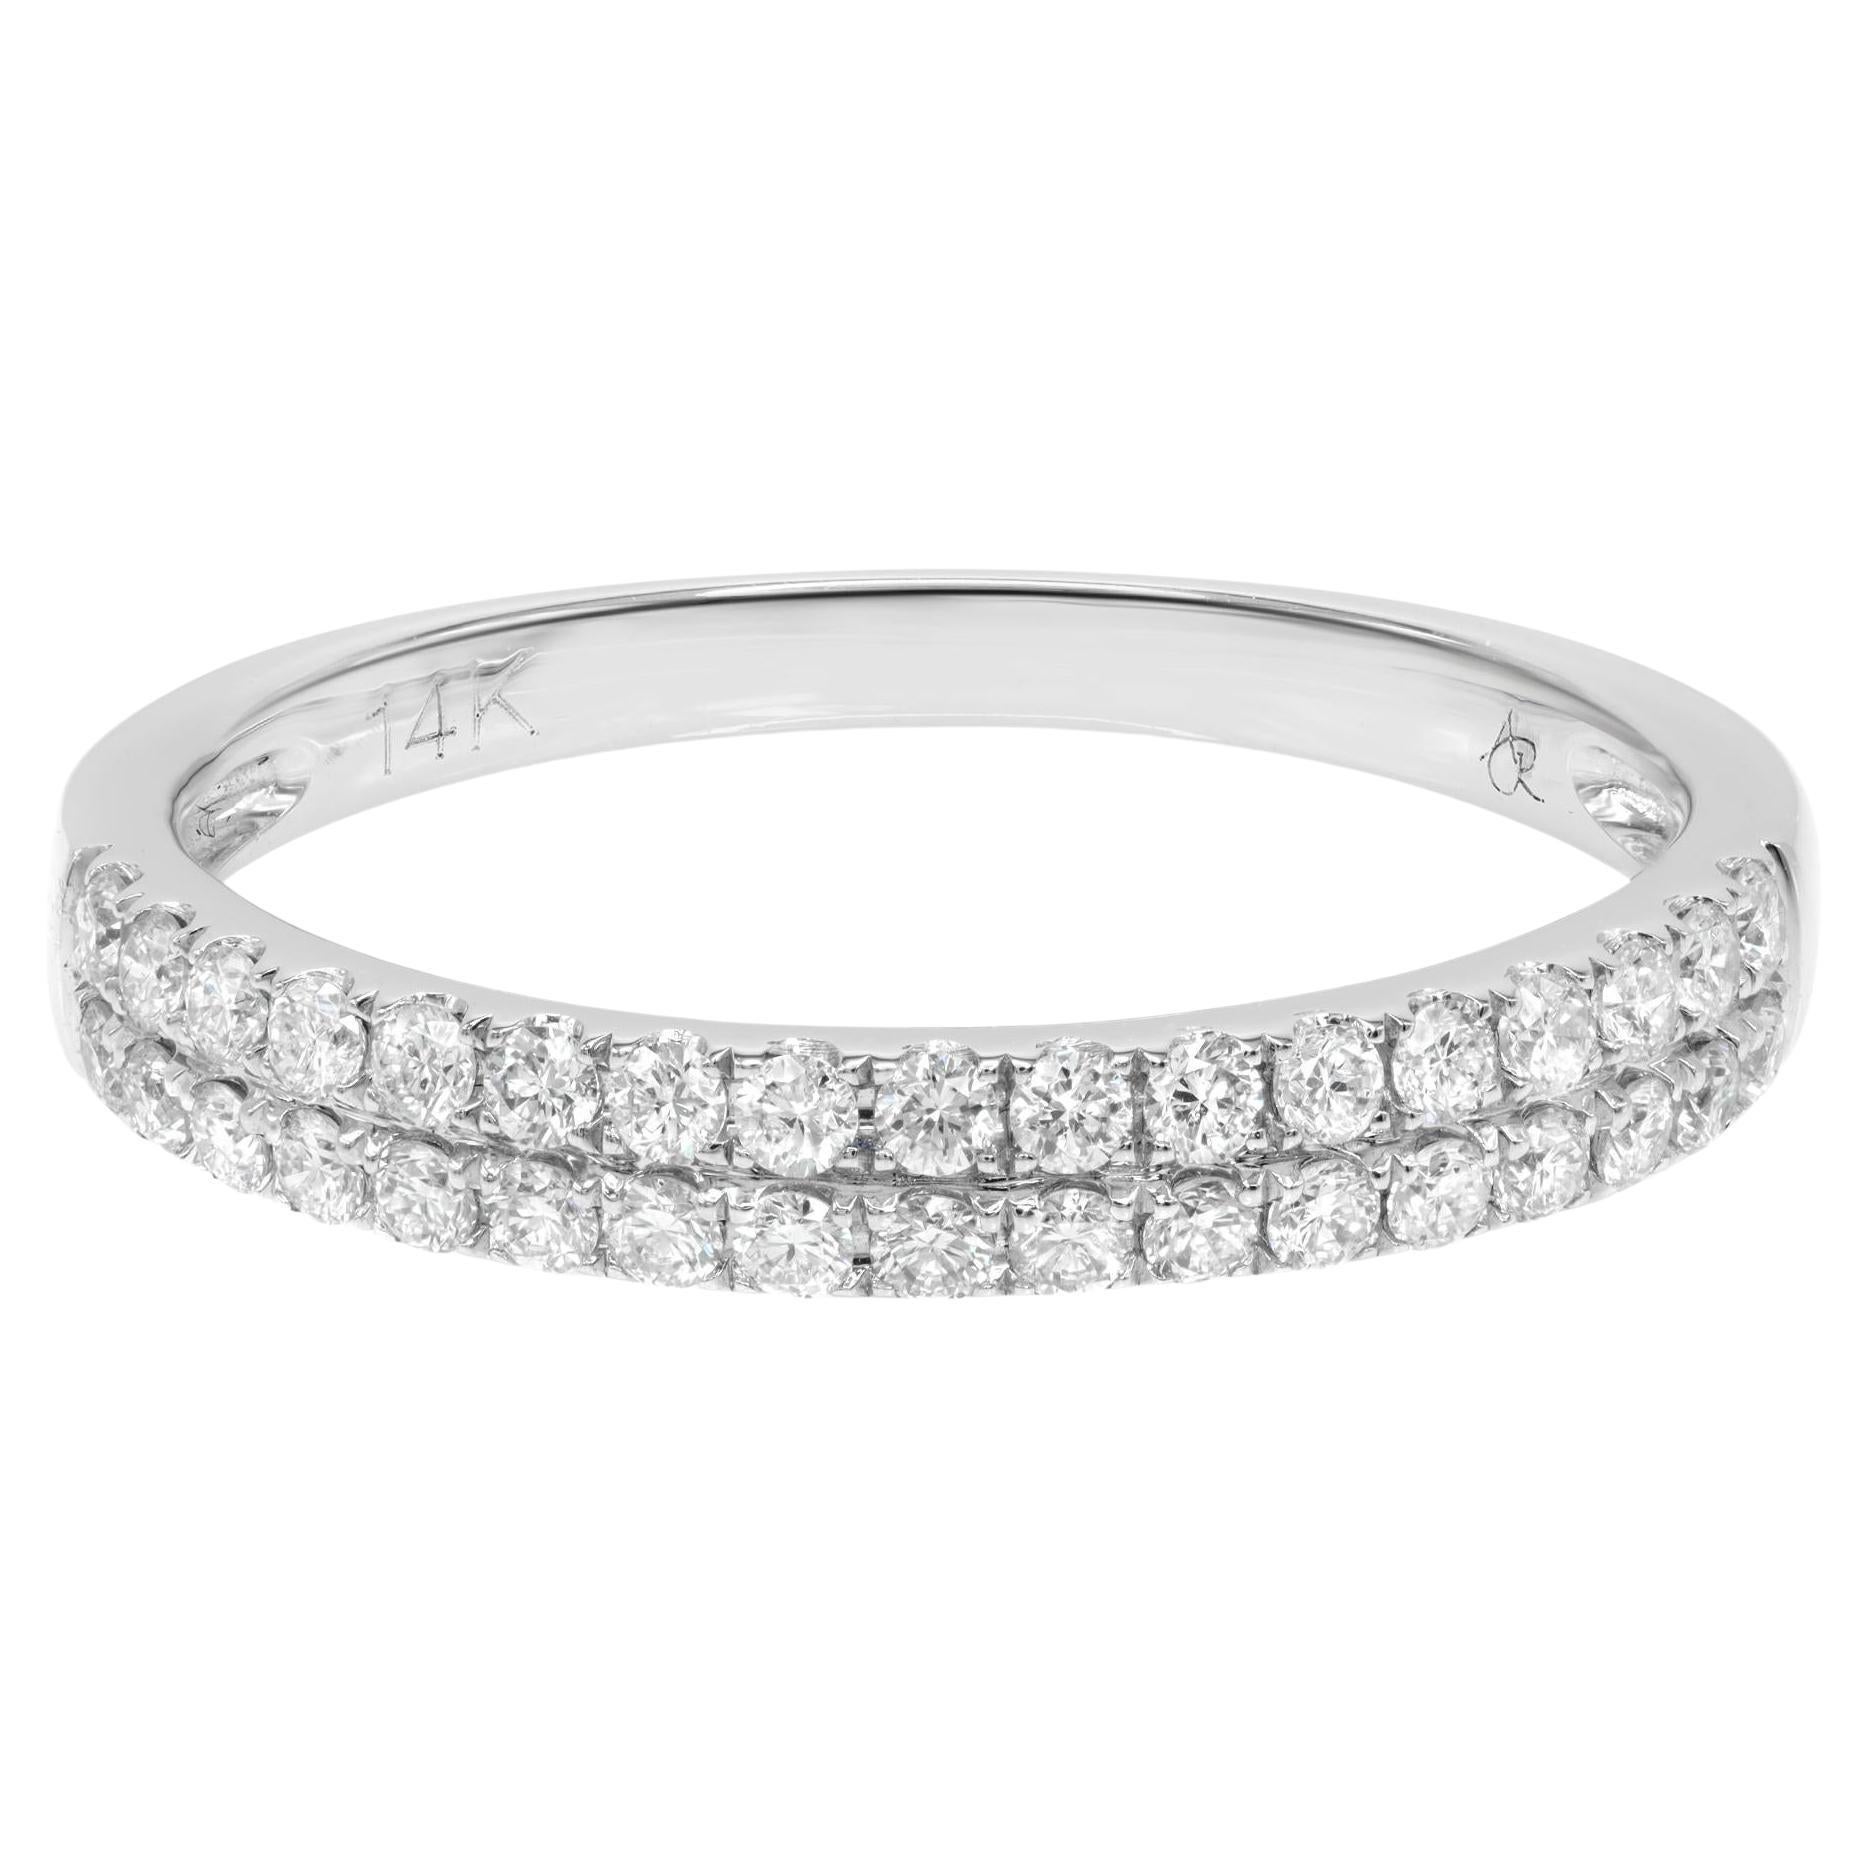 Rachel Koen Double Row Pave Diamond Wedding Band Ring 14k White Gold 0.37cttw For Sale